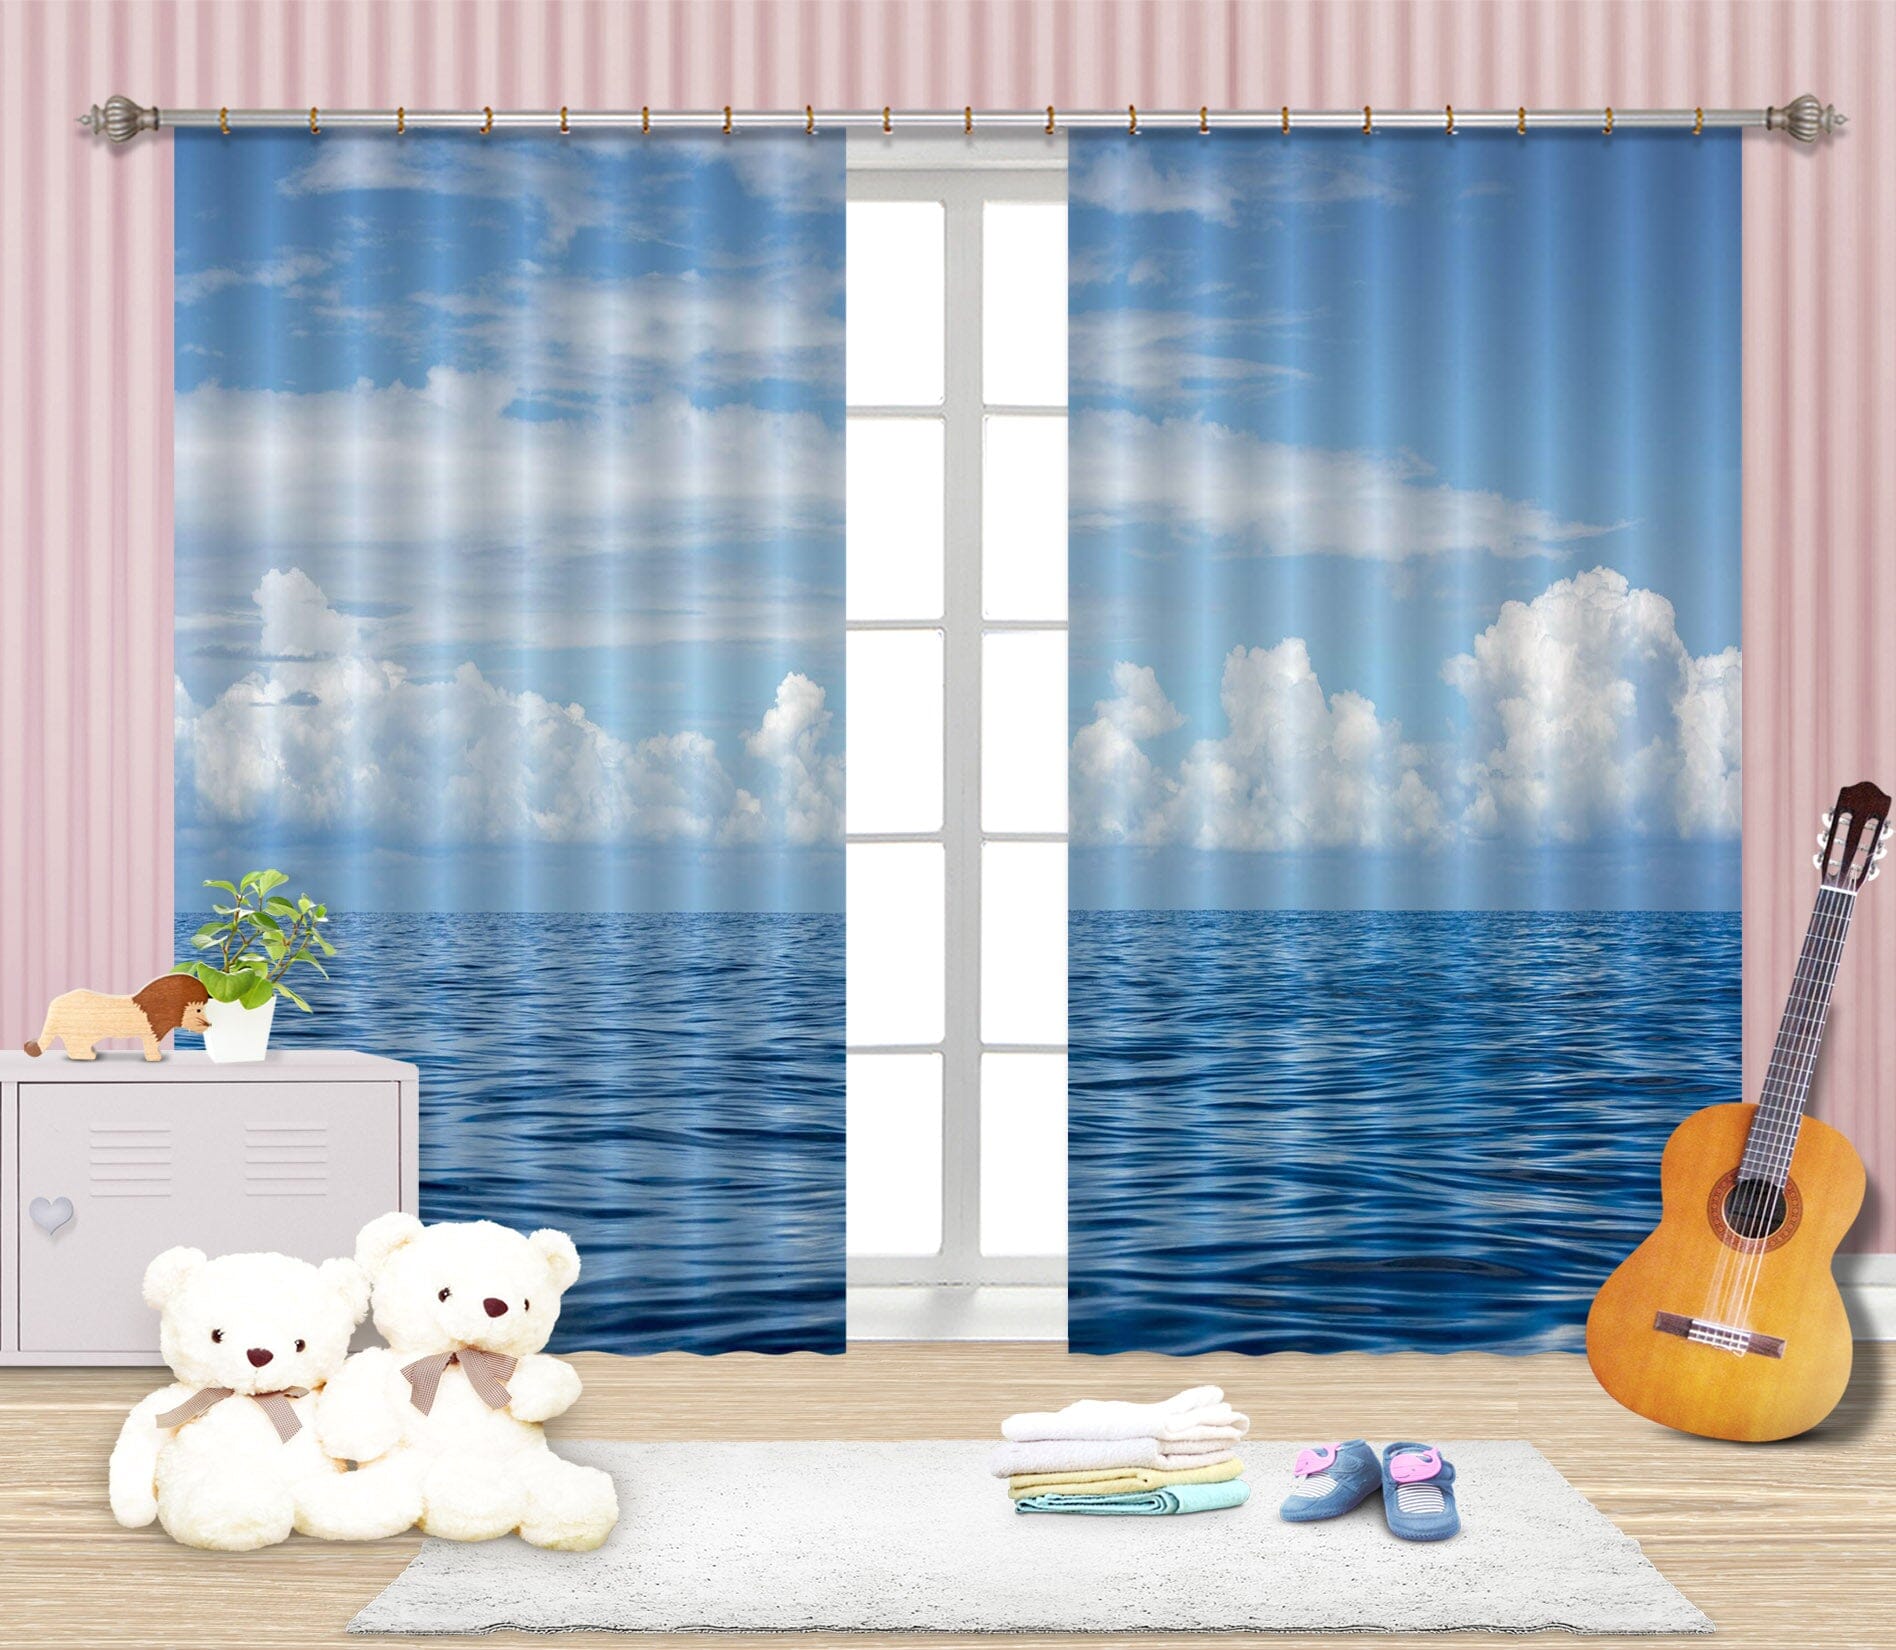 3D Crystal Clear Water 113 Marco Carmassi Curtain Curtains Drapes Curtains AJ Creativity Home 